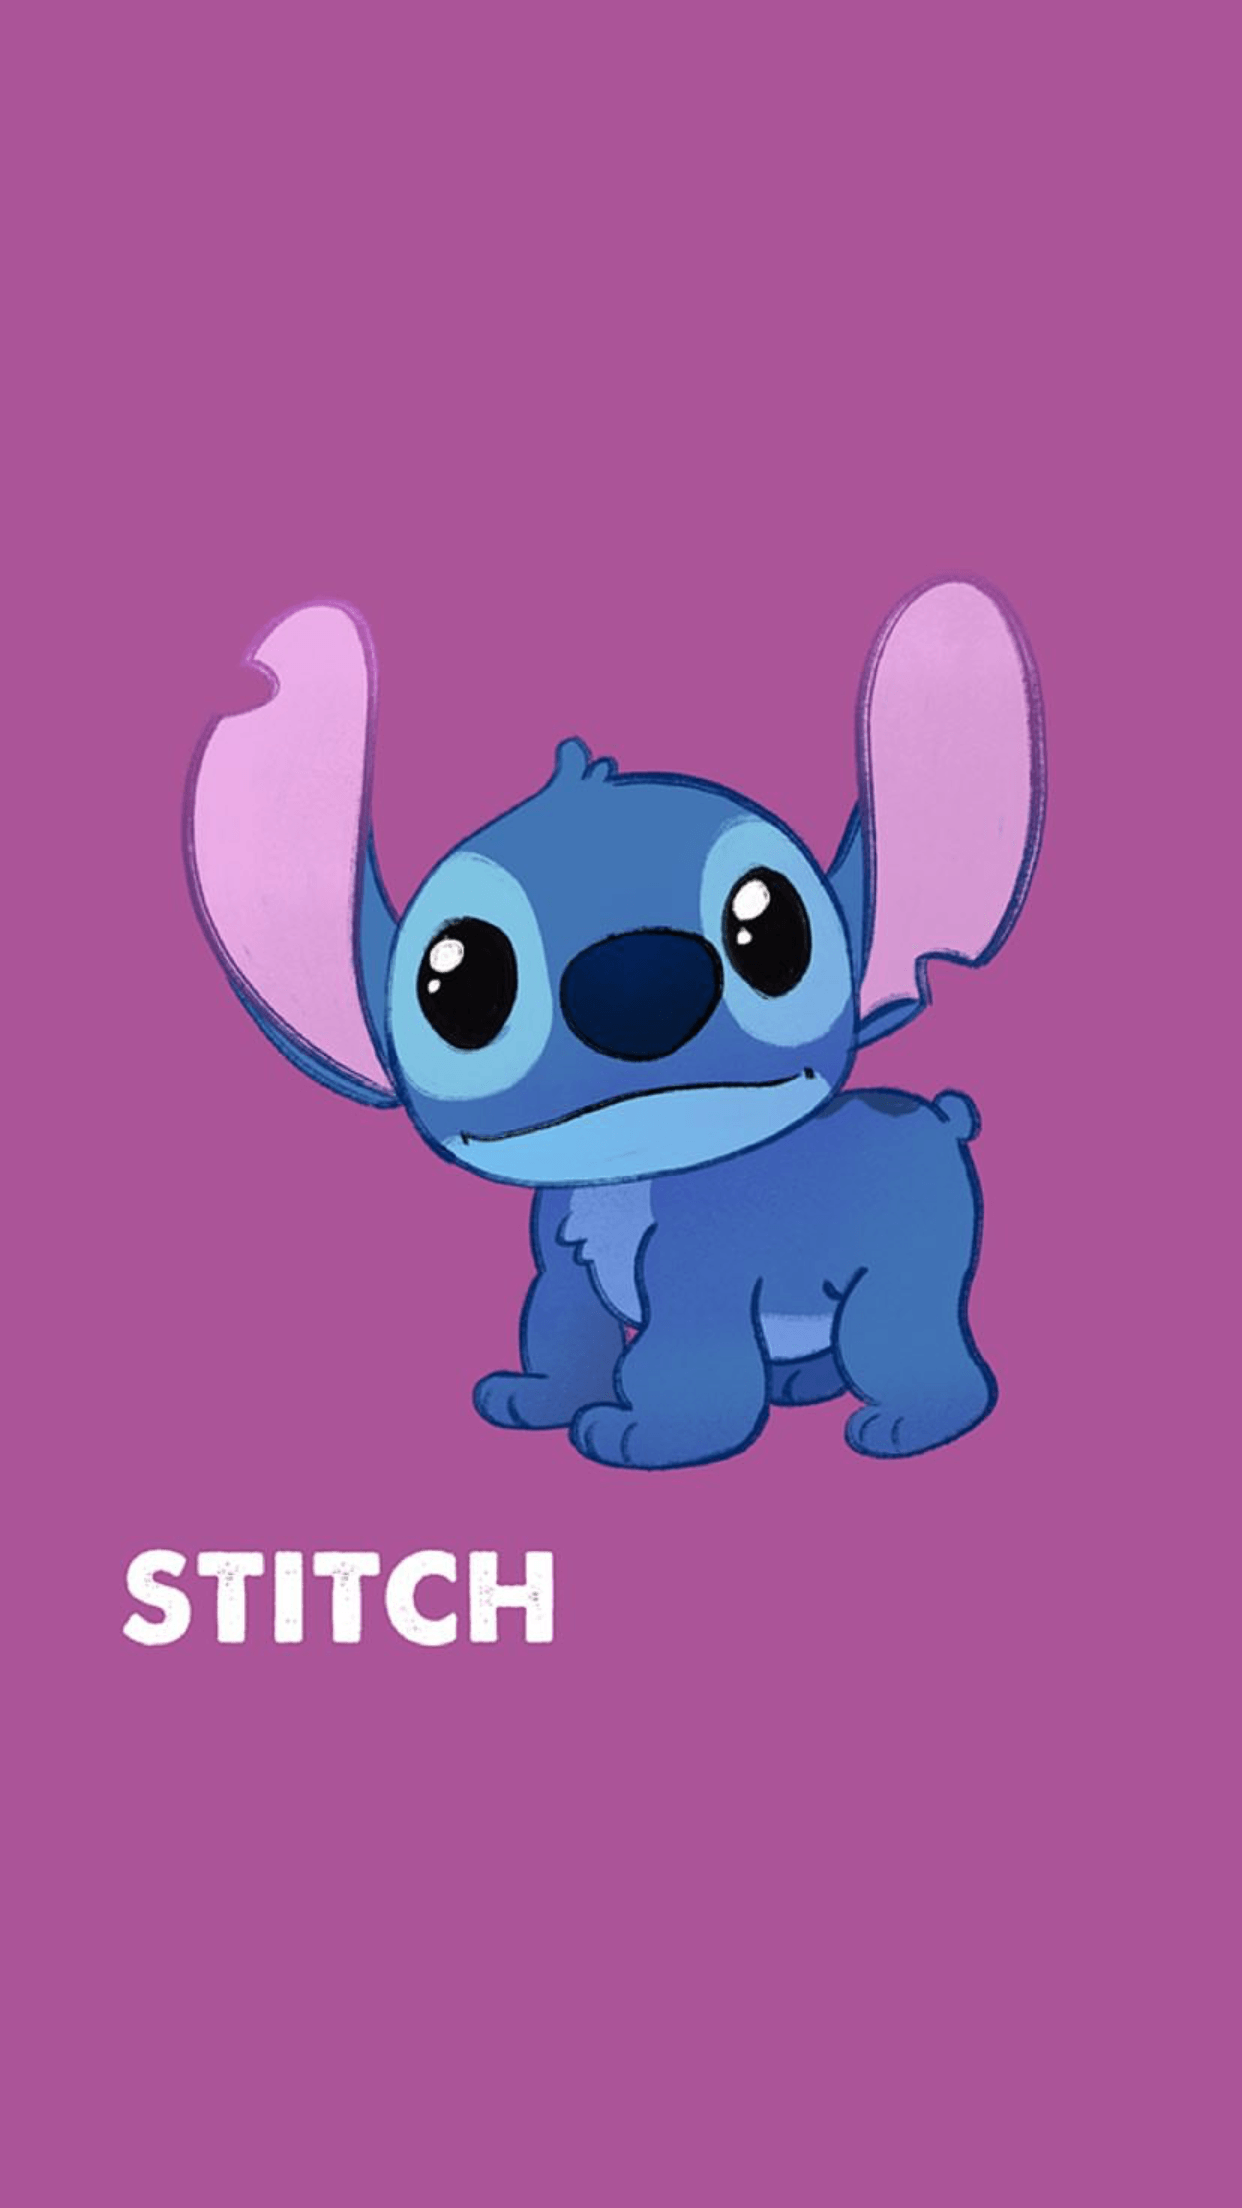 Stitch wallpaper for phone and desktop - Stitch